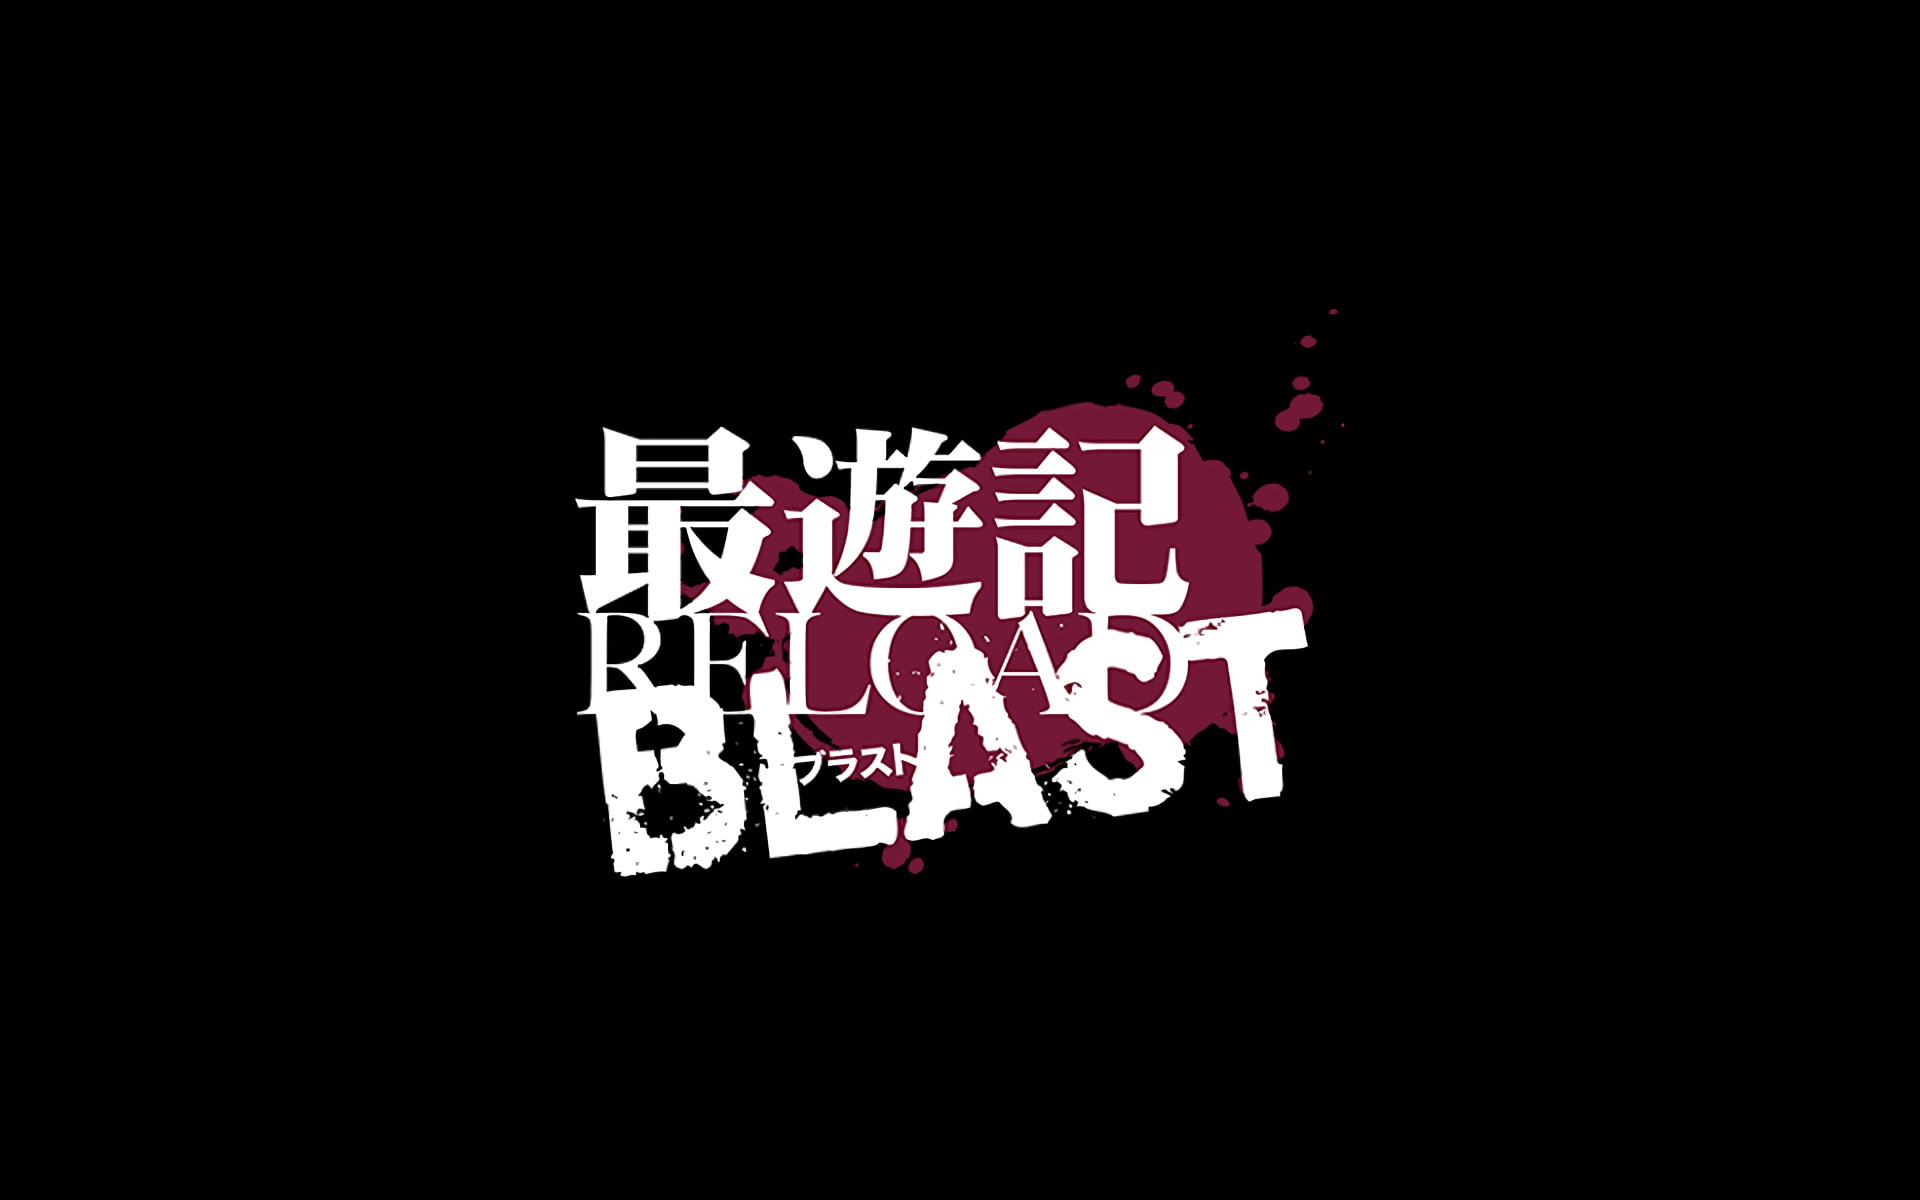 Free Download Hd Wallpaper Anime Saiyuuki Reload Blast Wallpaper 